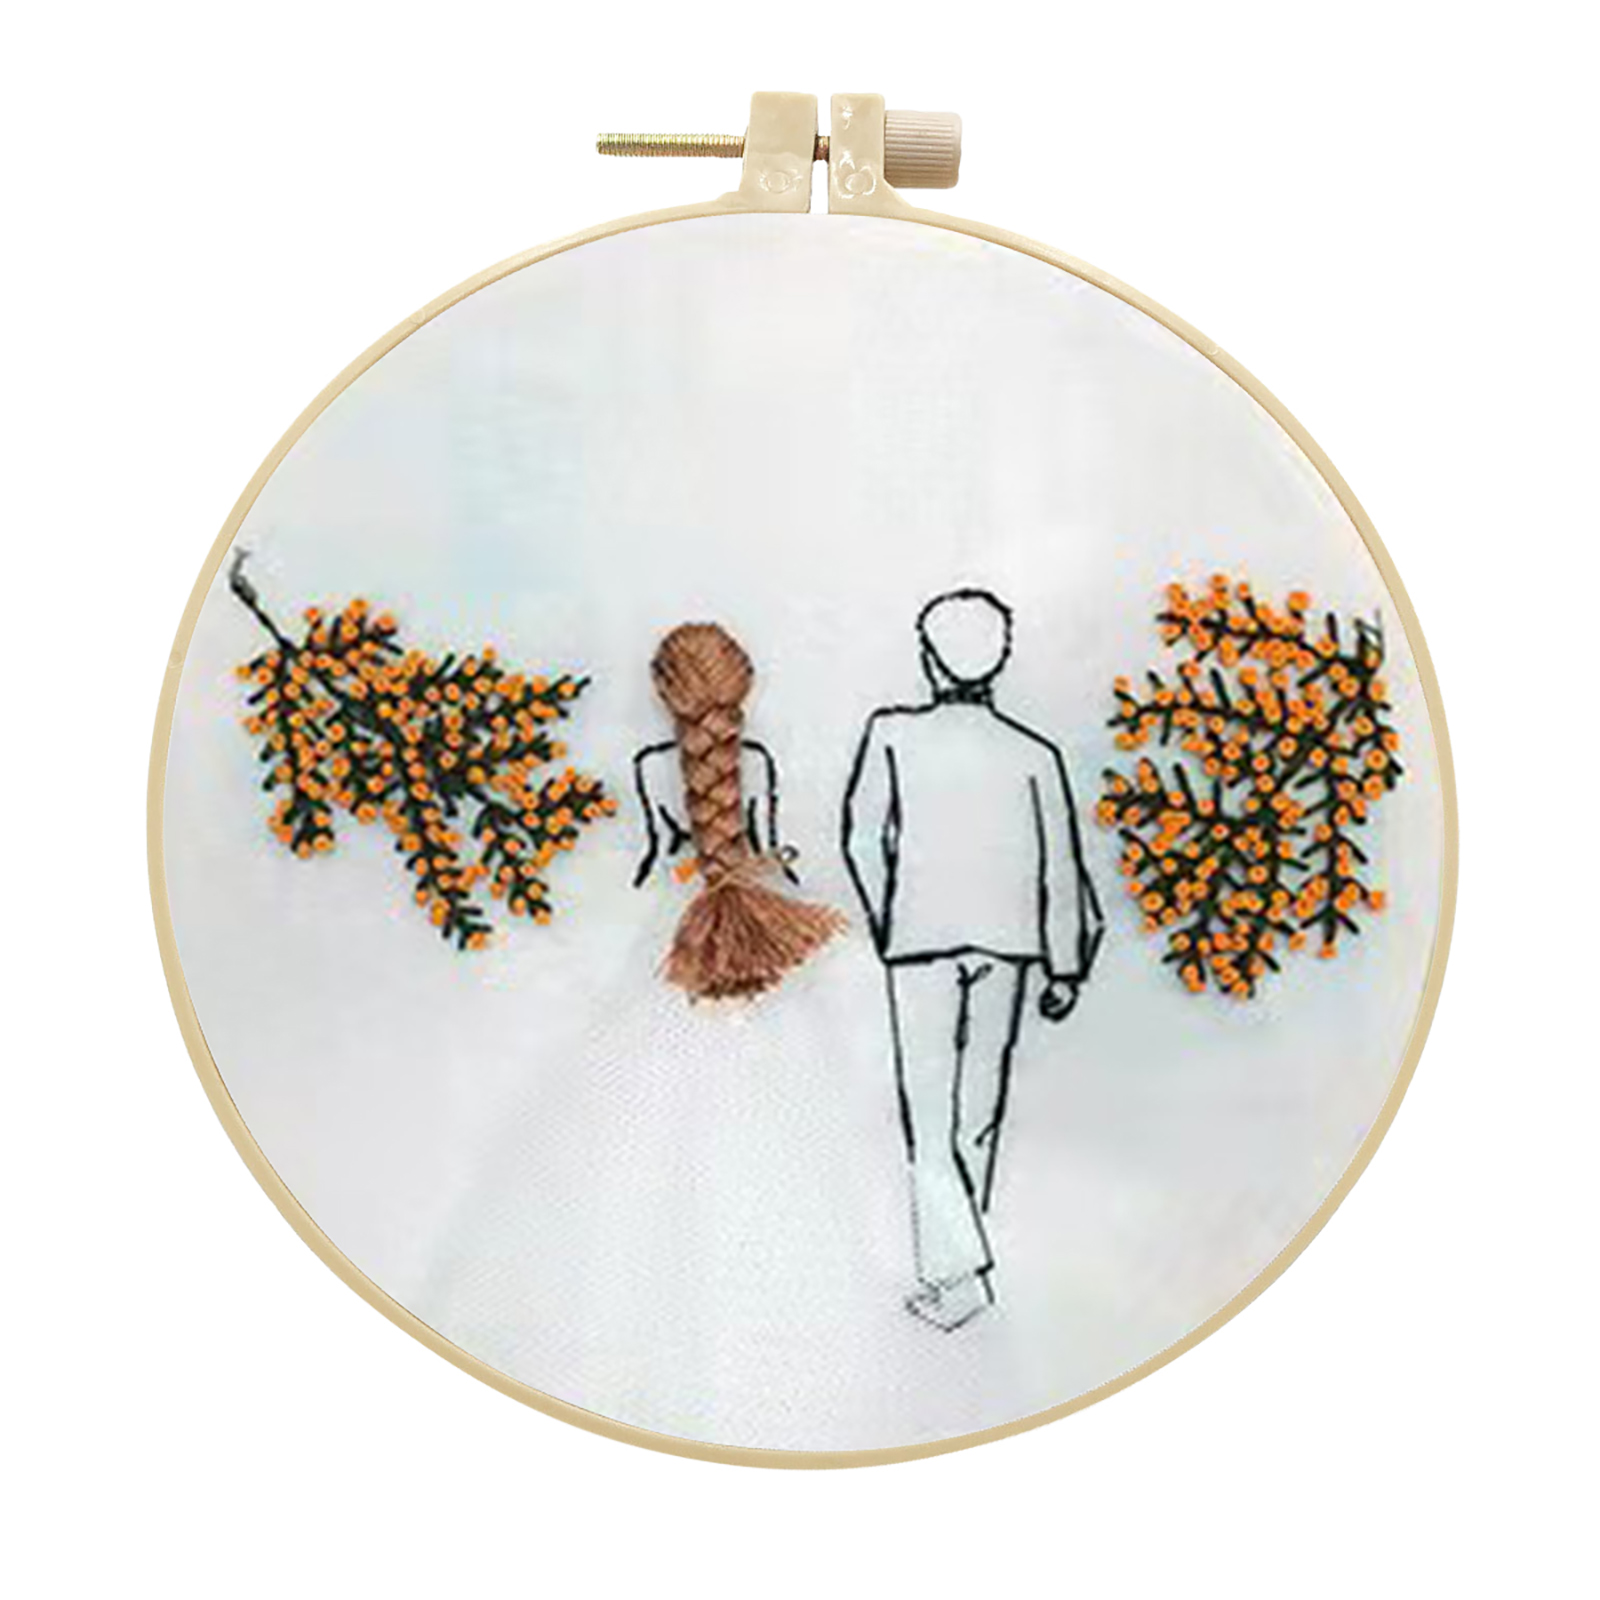 DIY Handmade Embroidery Kit Craft Cross Stitch Kits For Beginner - Romantic Weddings Pattern